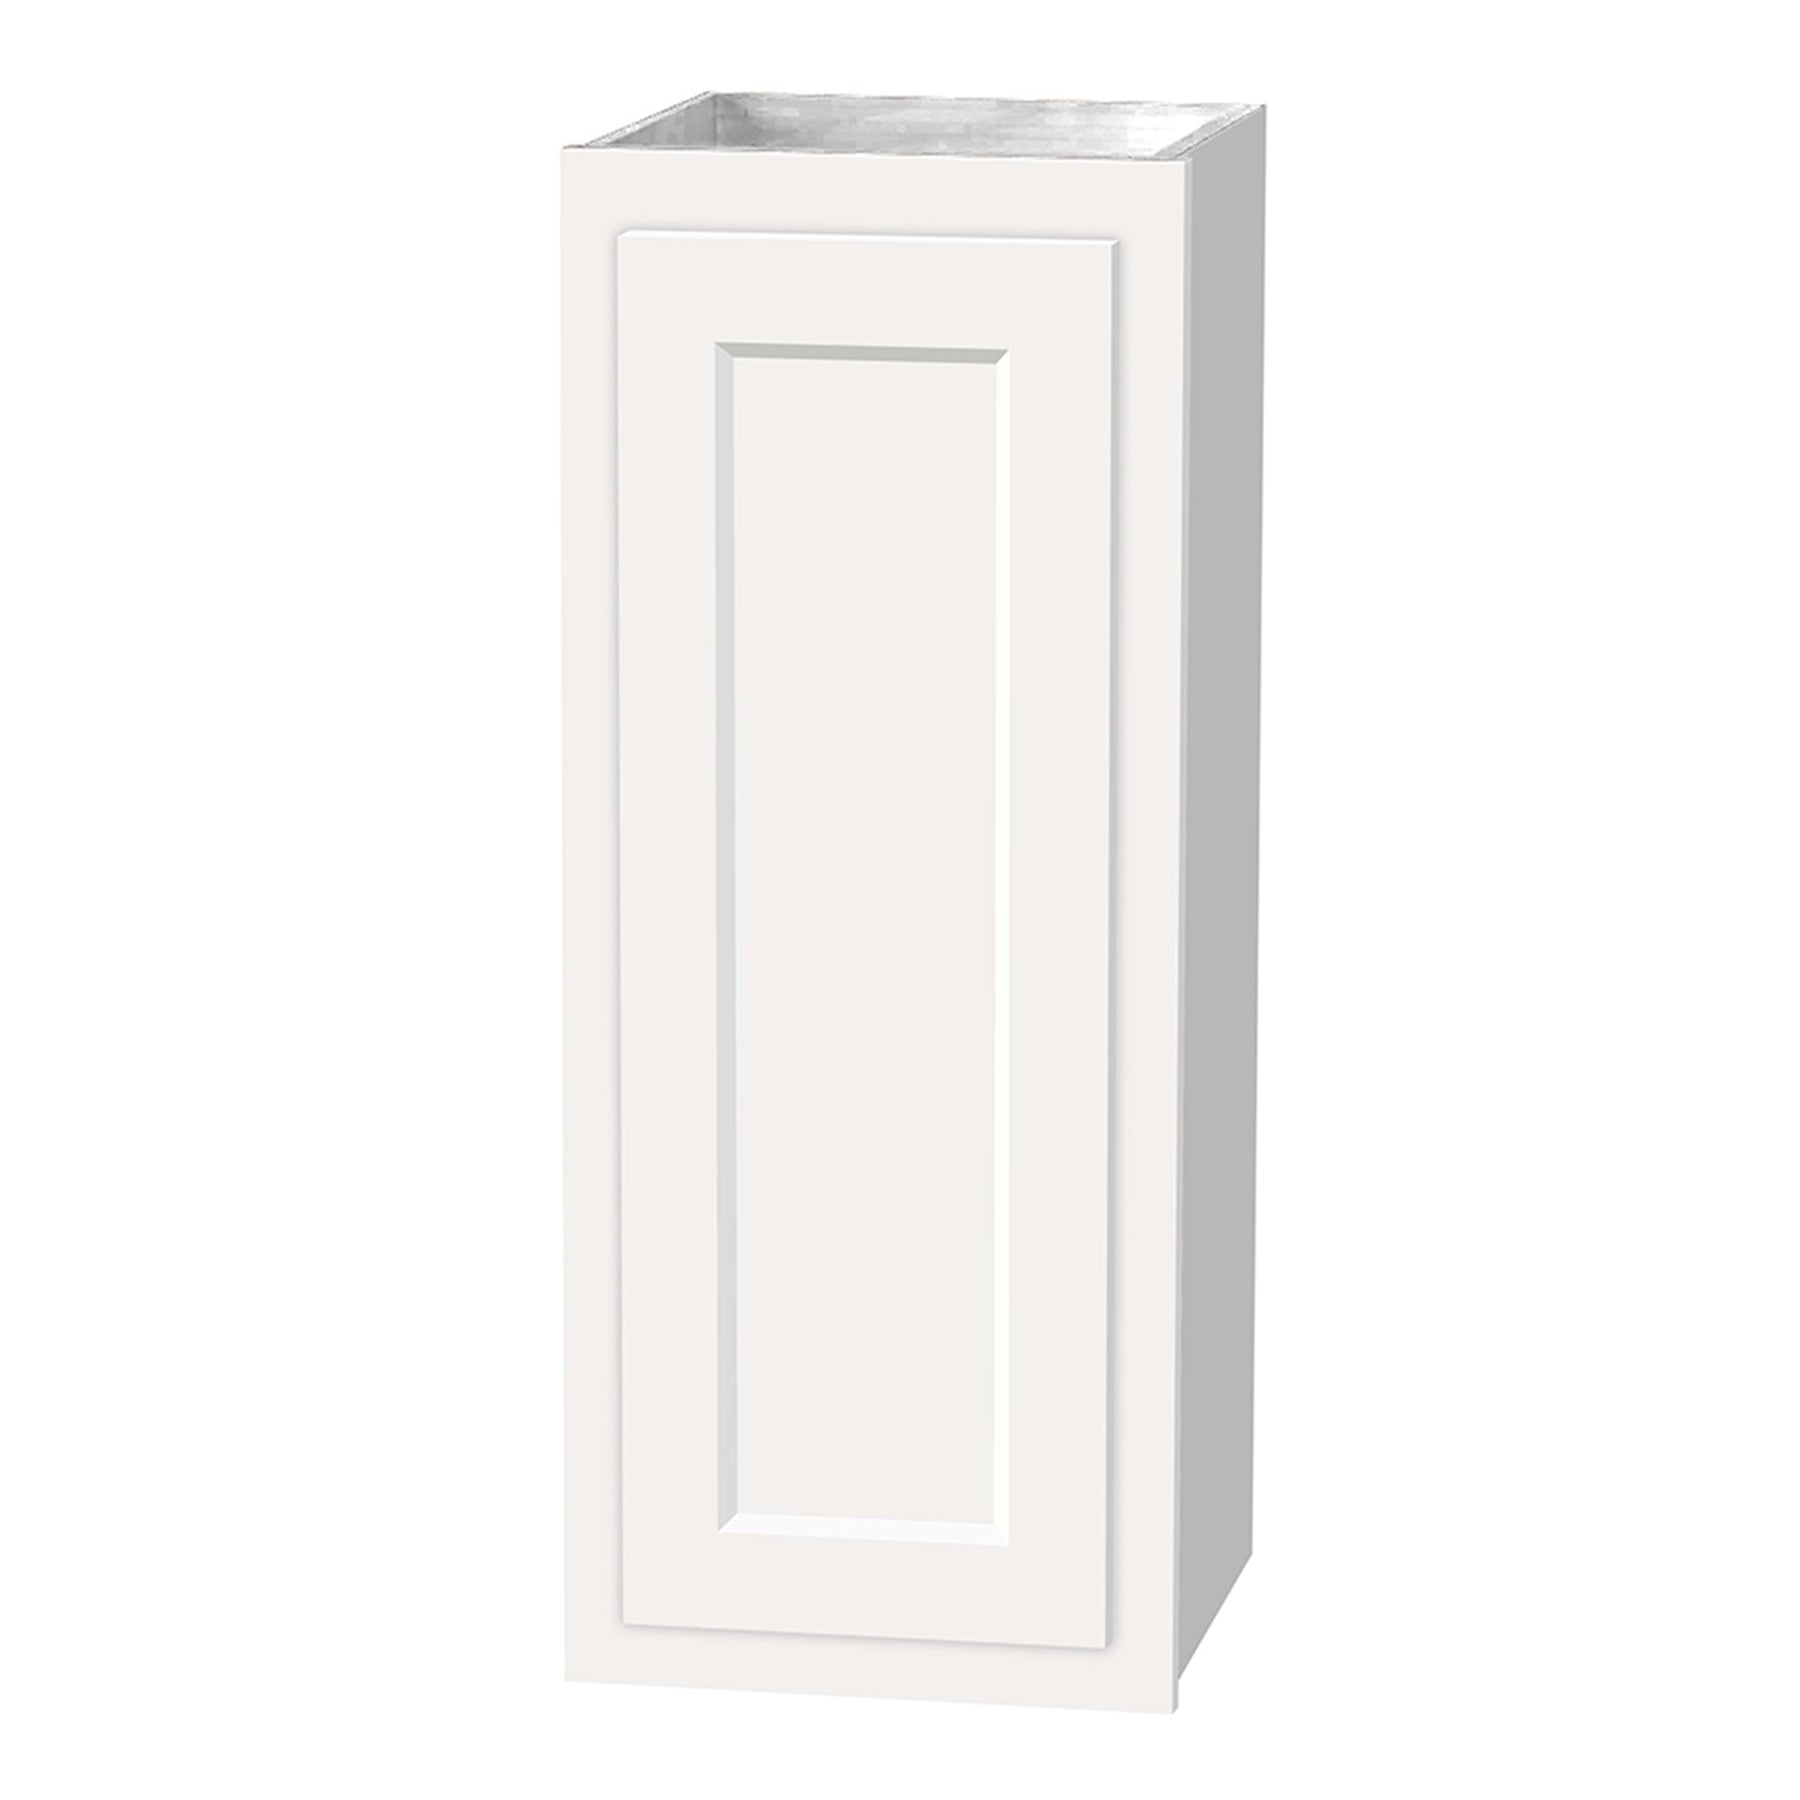 30 inch Wall Cabinets - Single Door - Dwhite Shaker - 12 Inch W x 30 Inch H x 12 Inch D